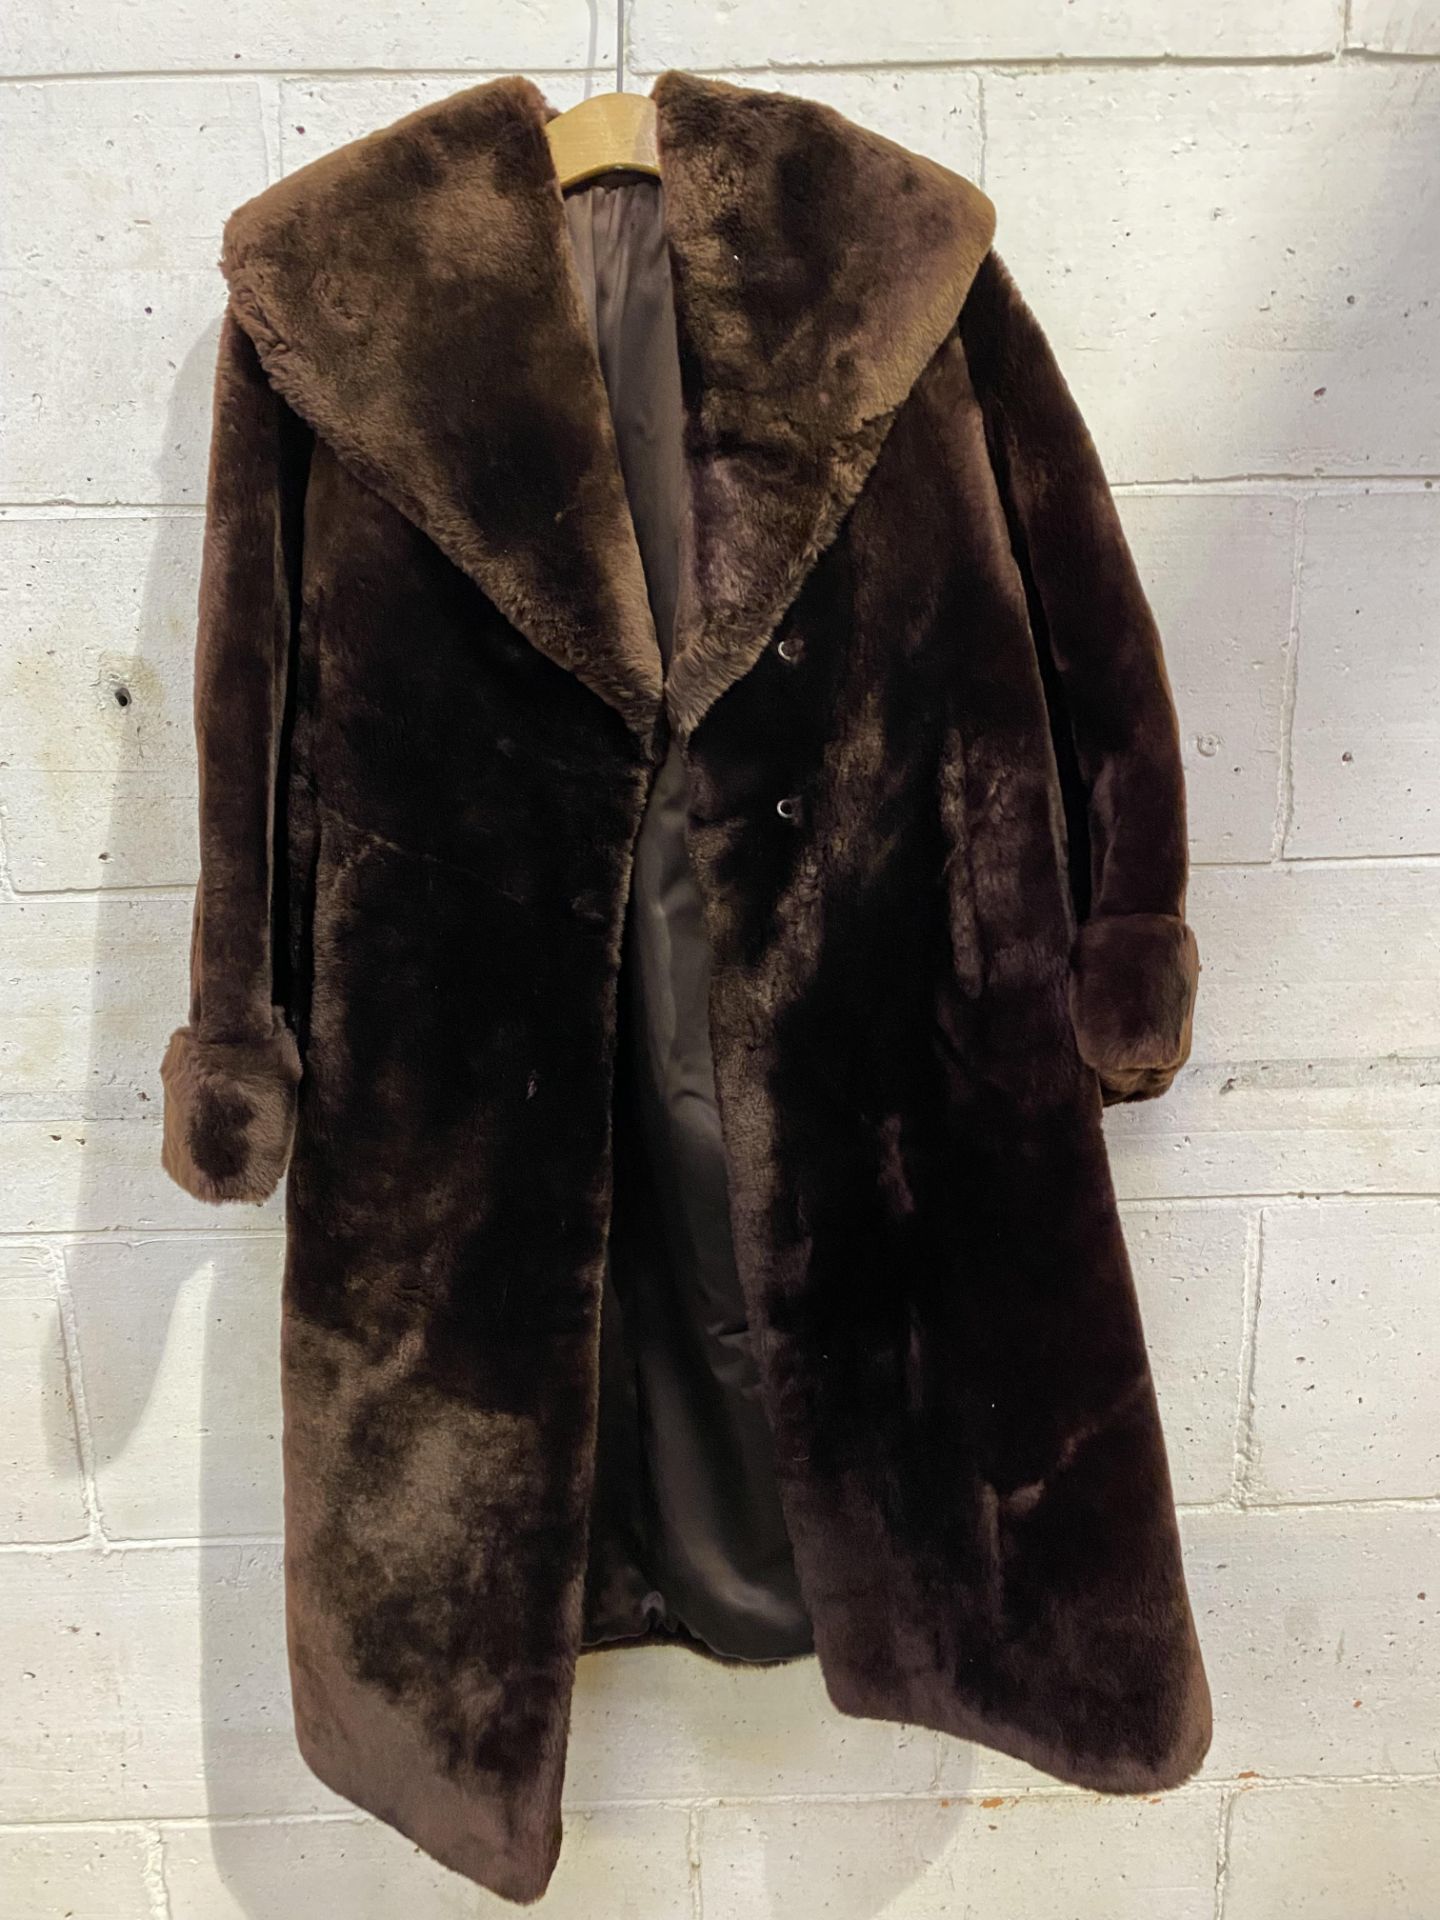 Full length fur coat